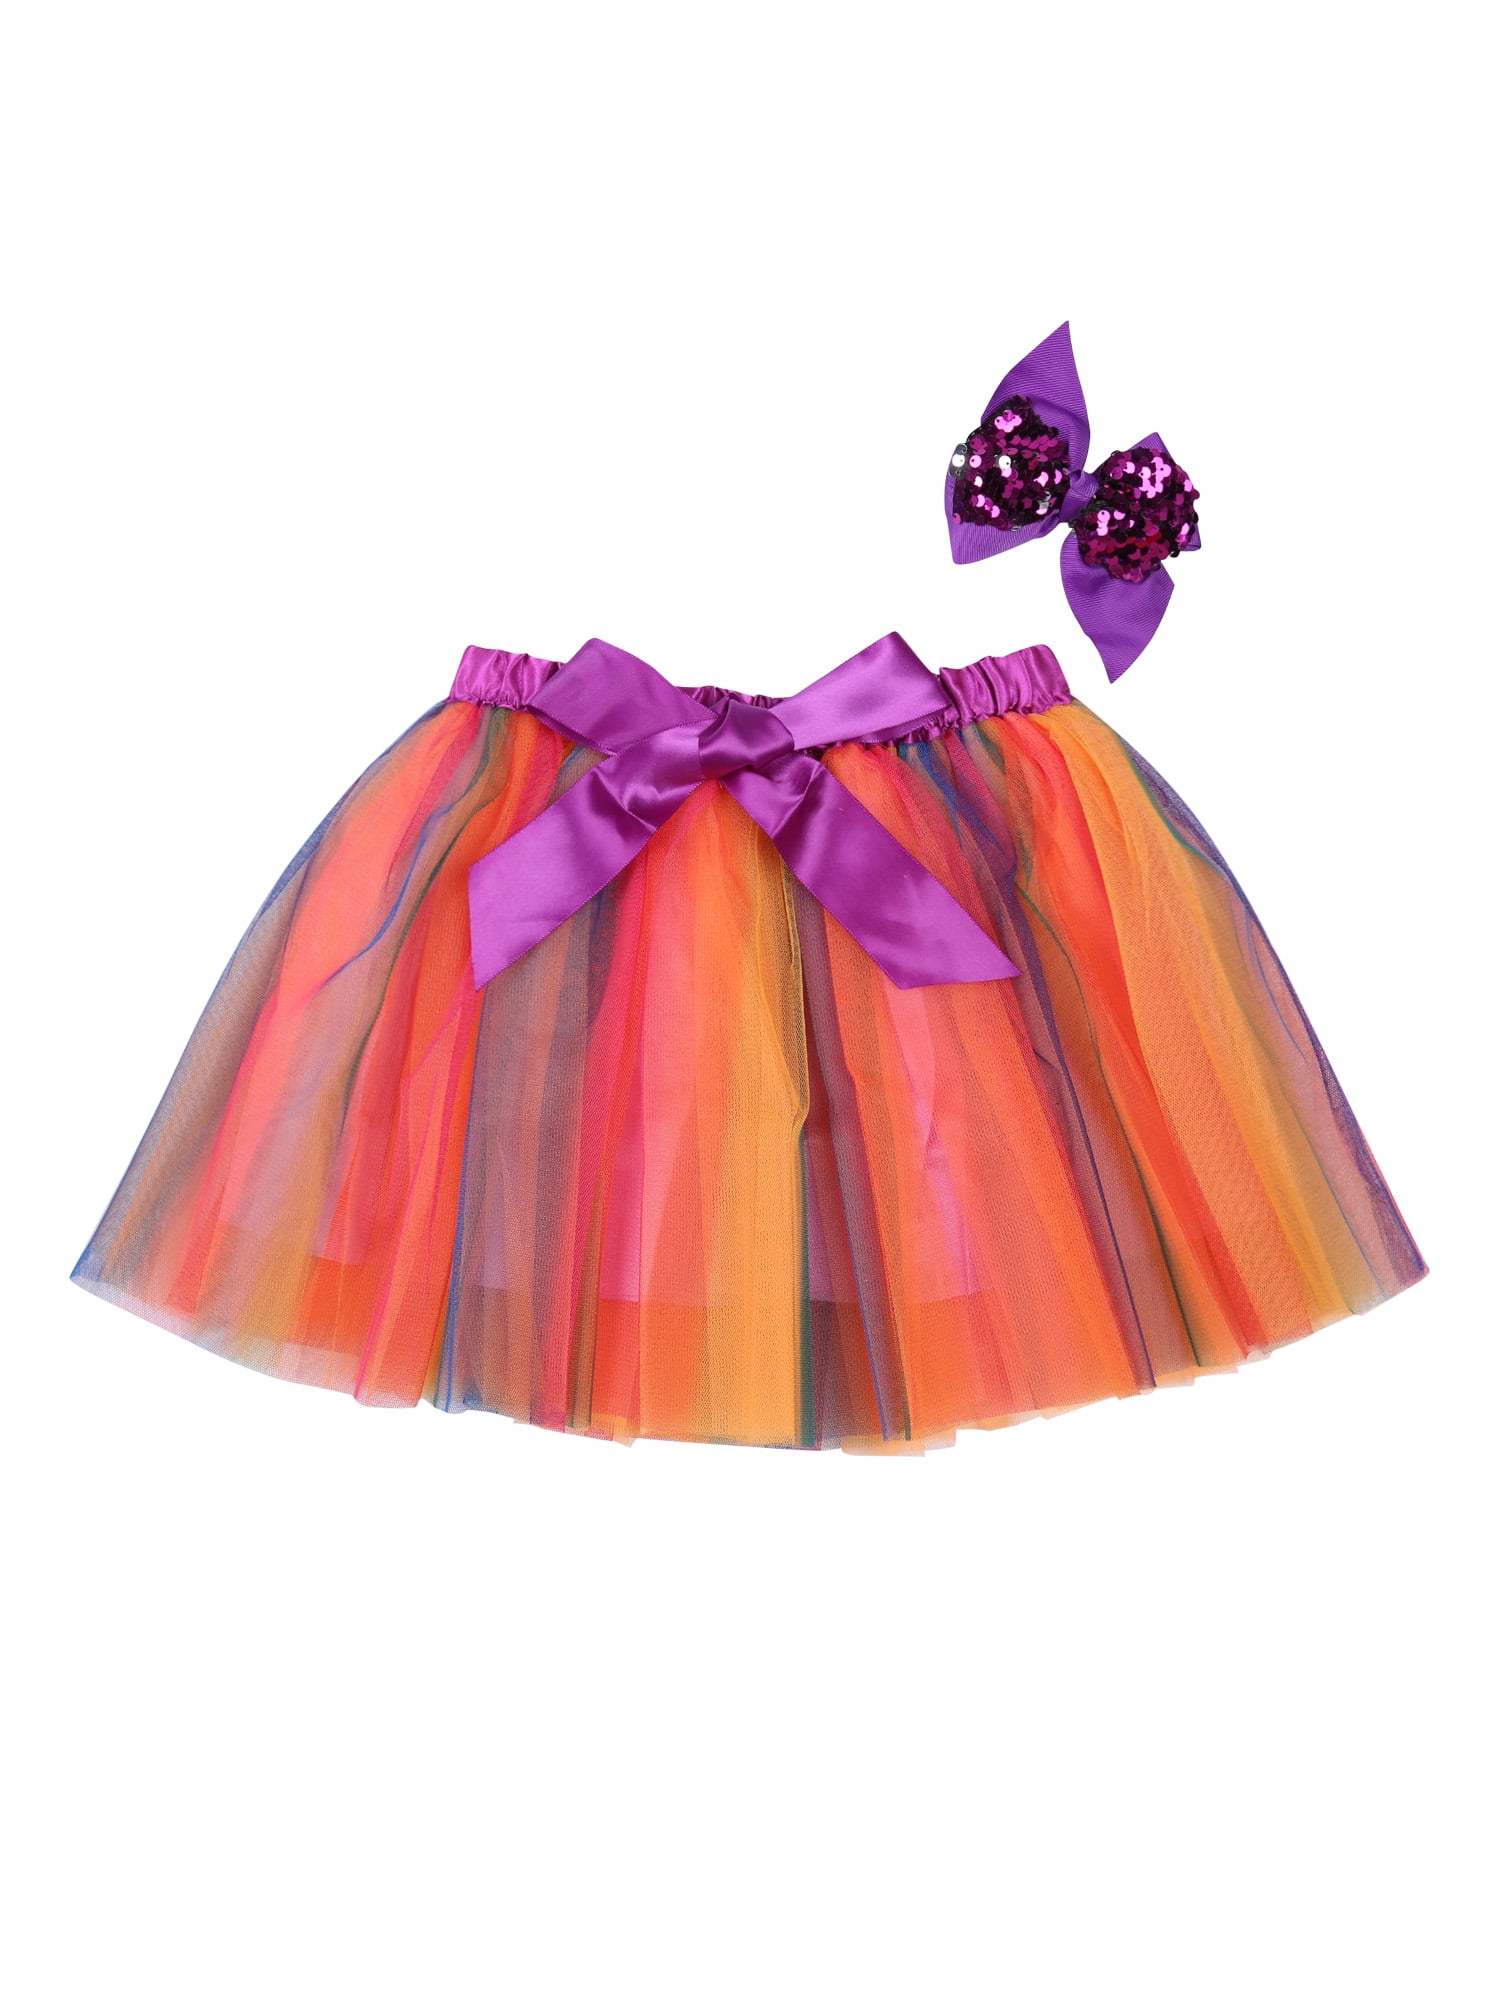 Kid Girls Light Up Tutu Skirt 5 Layers Rainbow Tulle Dress Neon Halloween Cosutmes for 3-10 Years